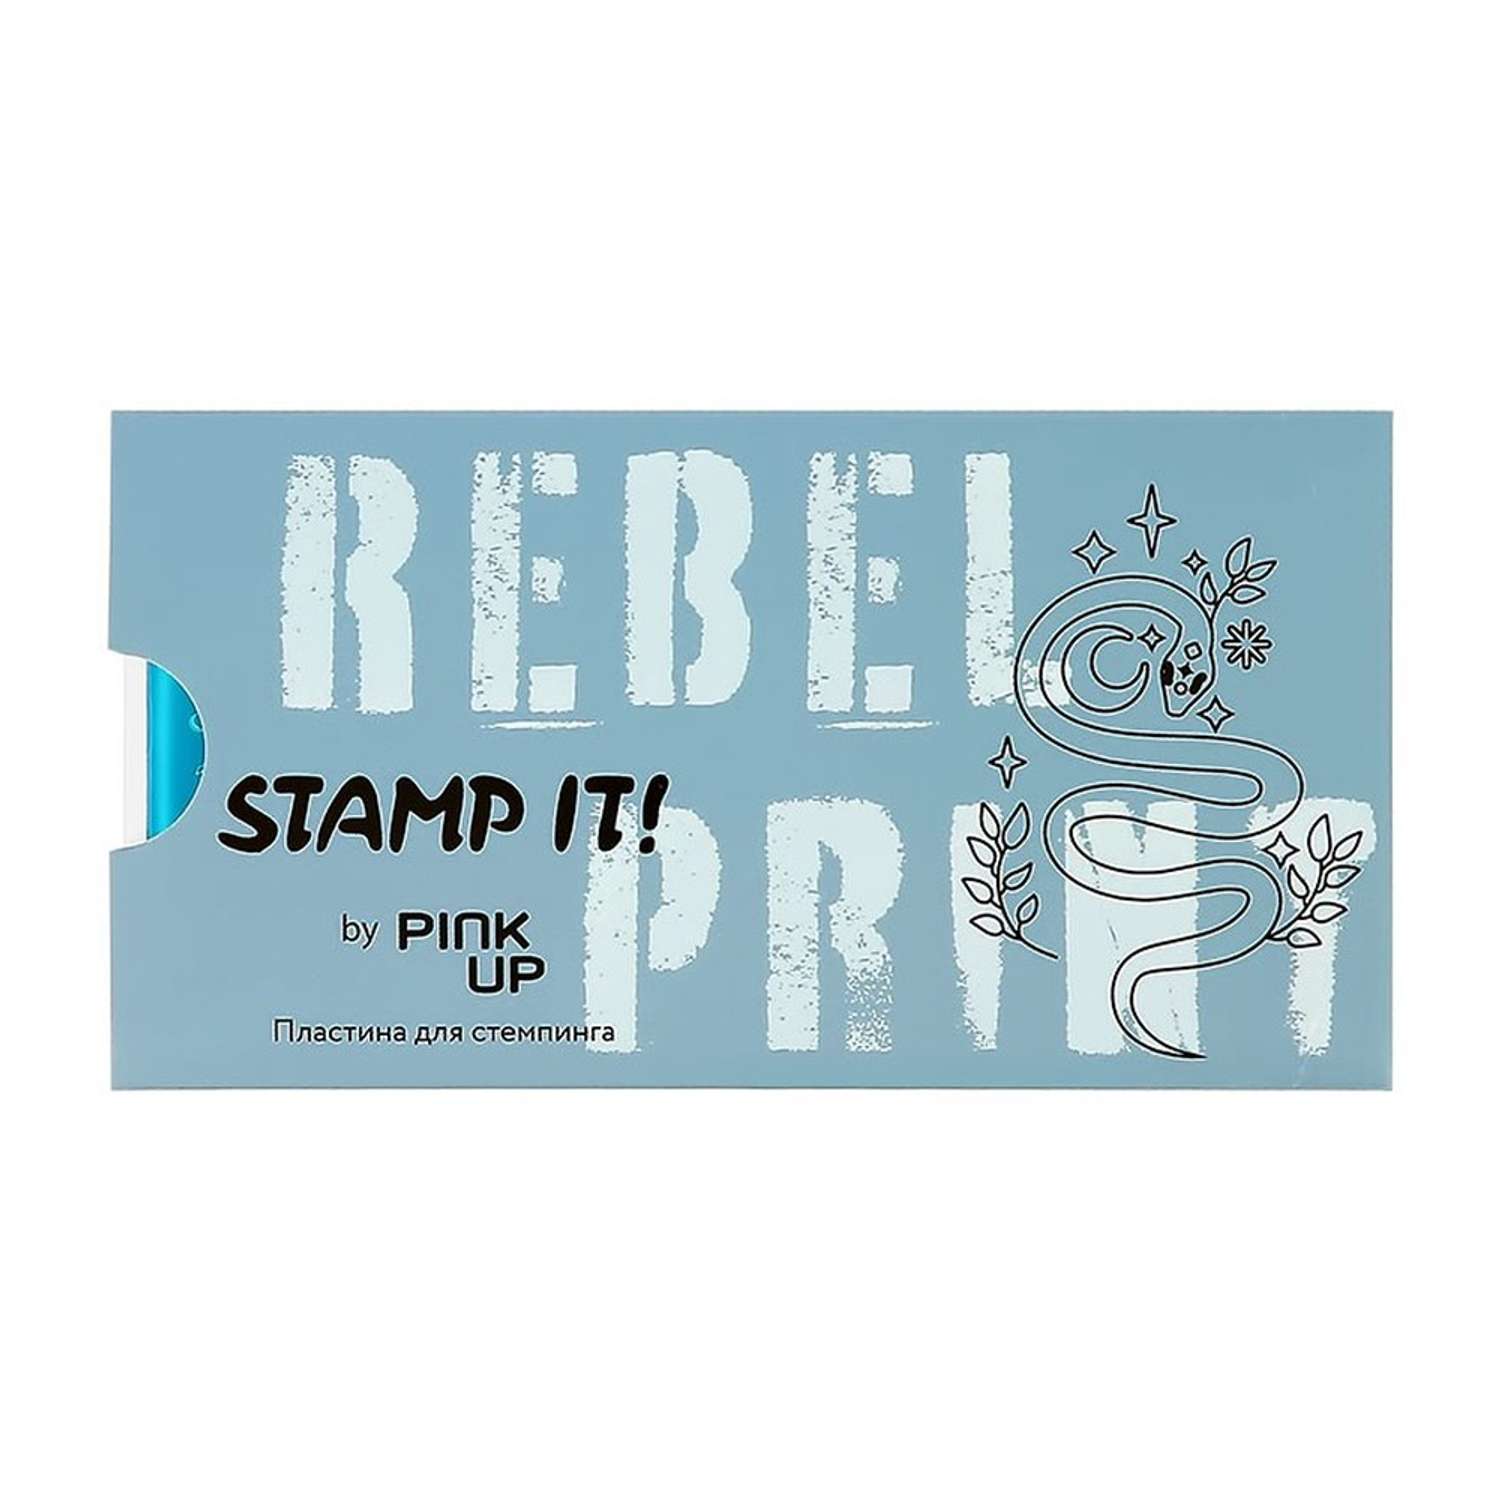 Пластина для стемпинга Pink Up stamp it! rebel print - фото 3